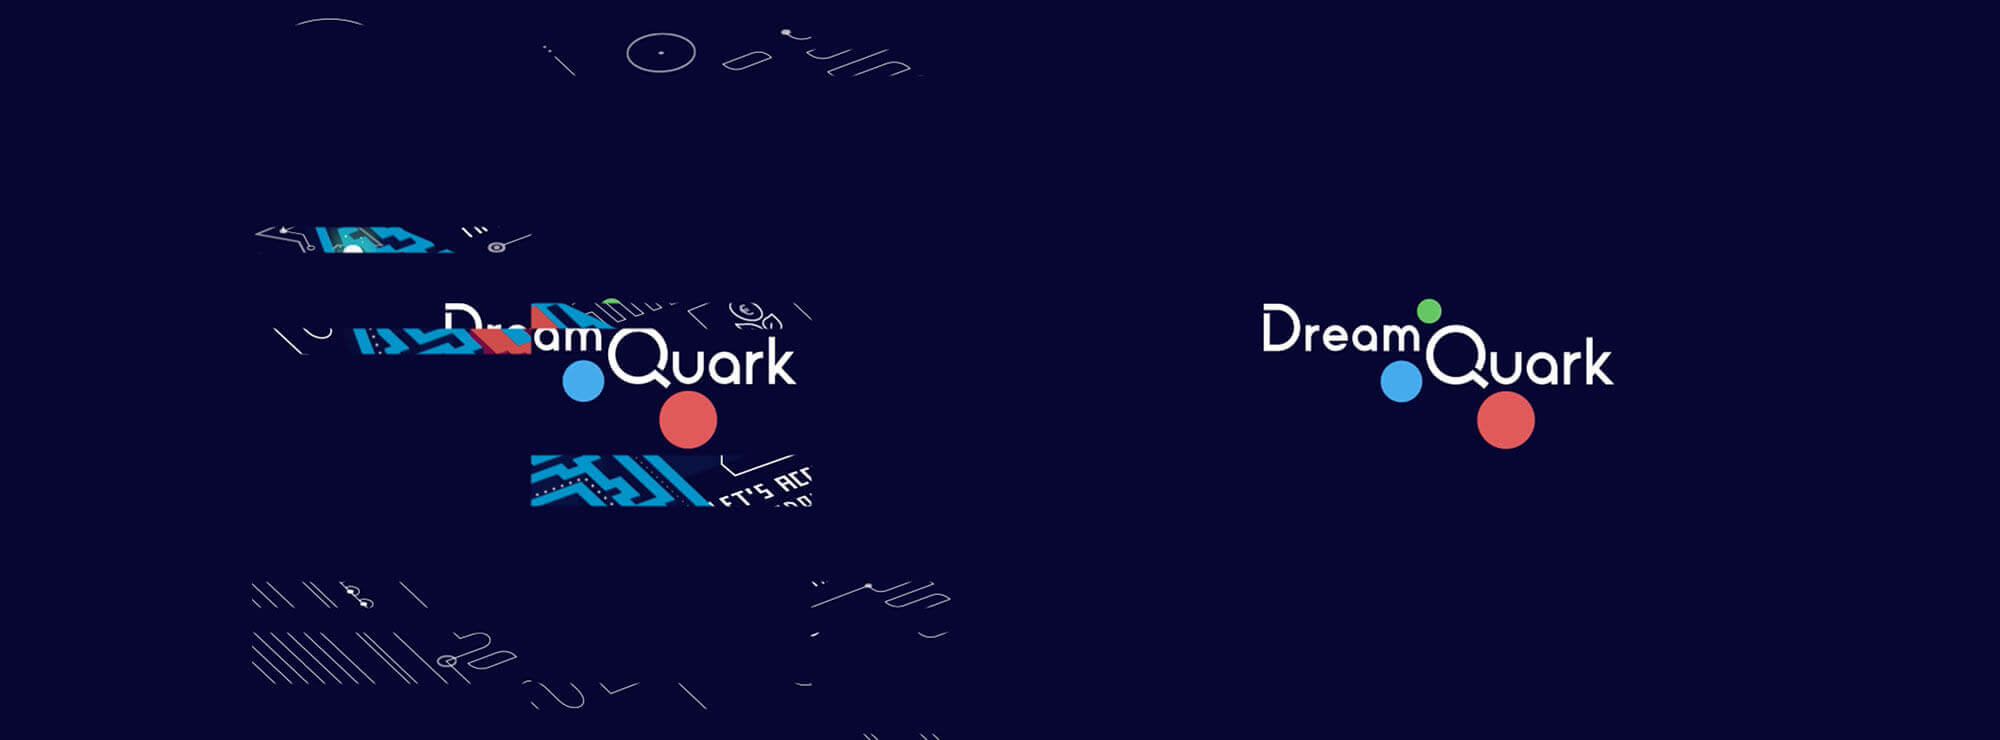 05 dreamquark voeux happynewyear 2020 brain labyrinthe robot intelligenceartificielle artificial ia quark.jpg